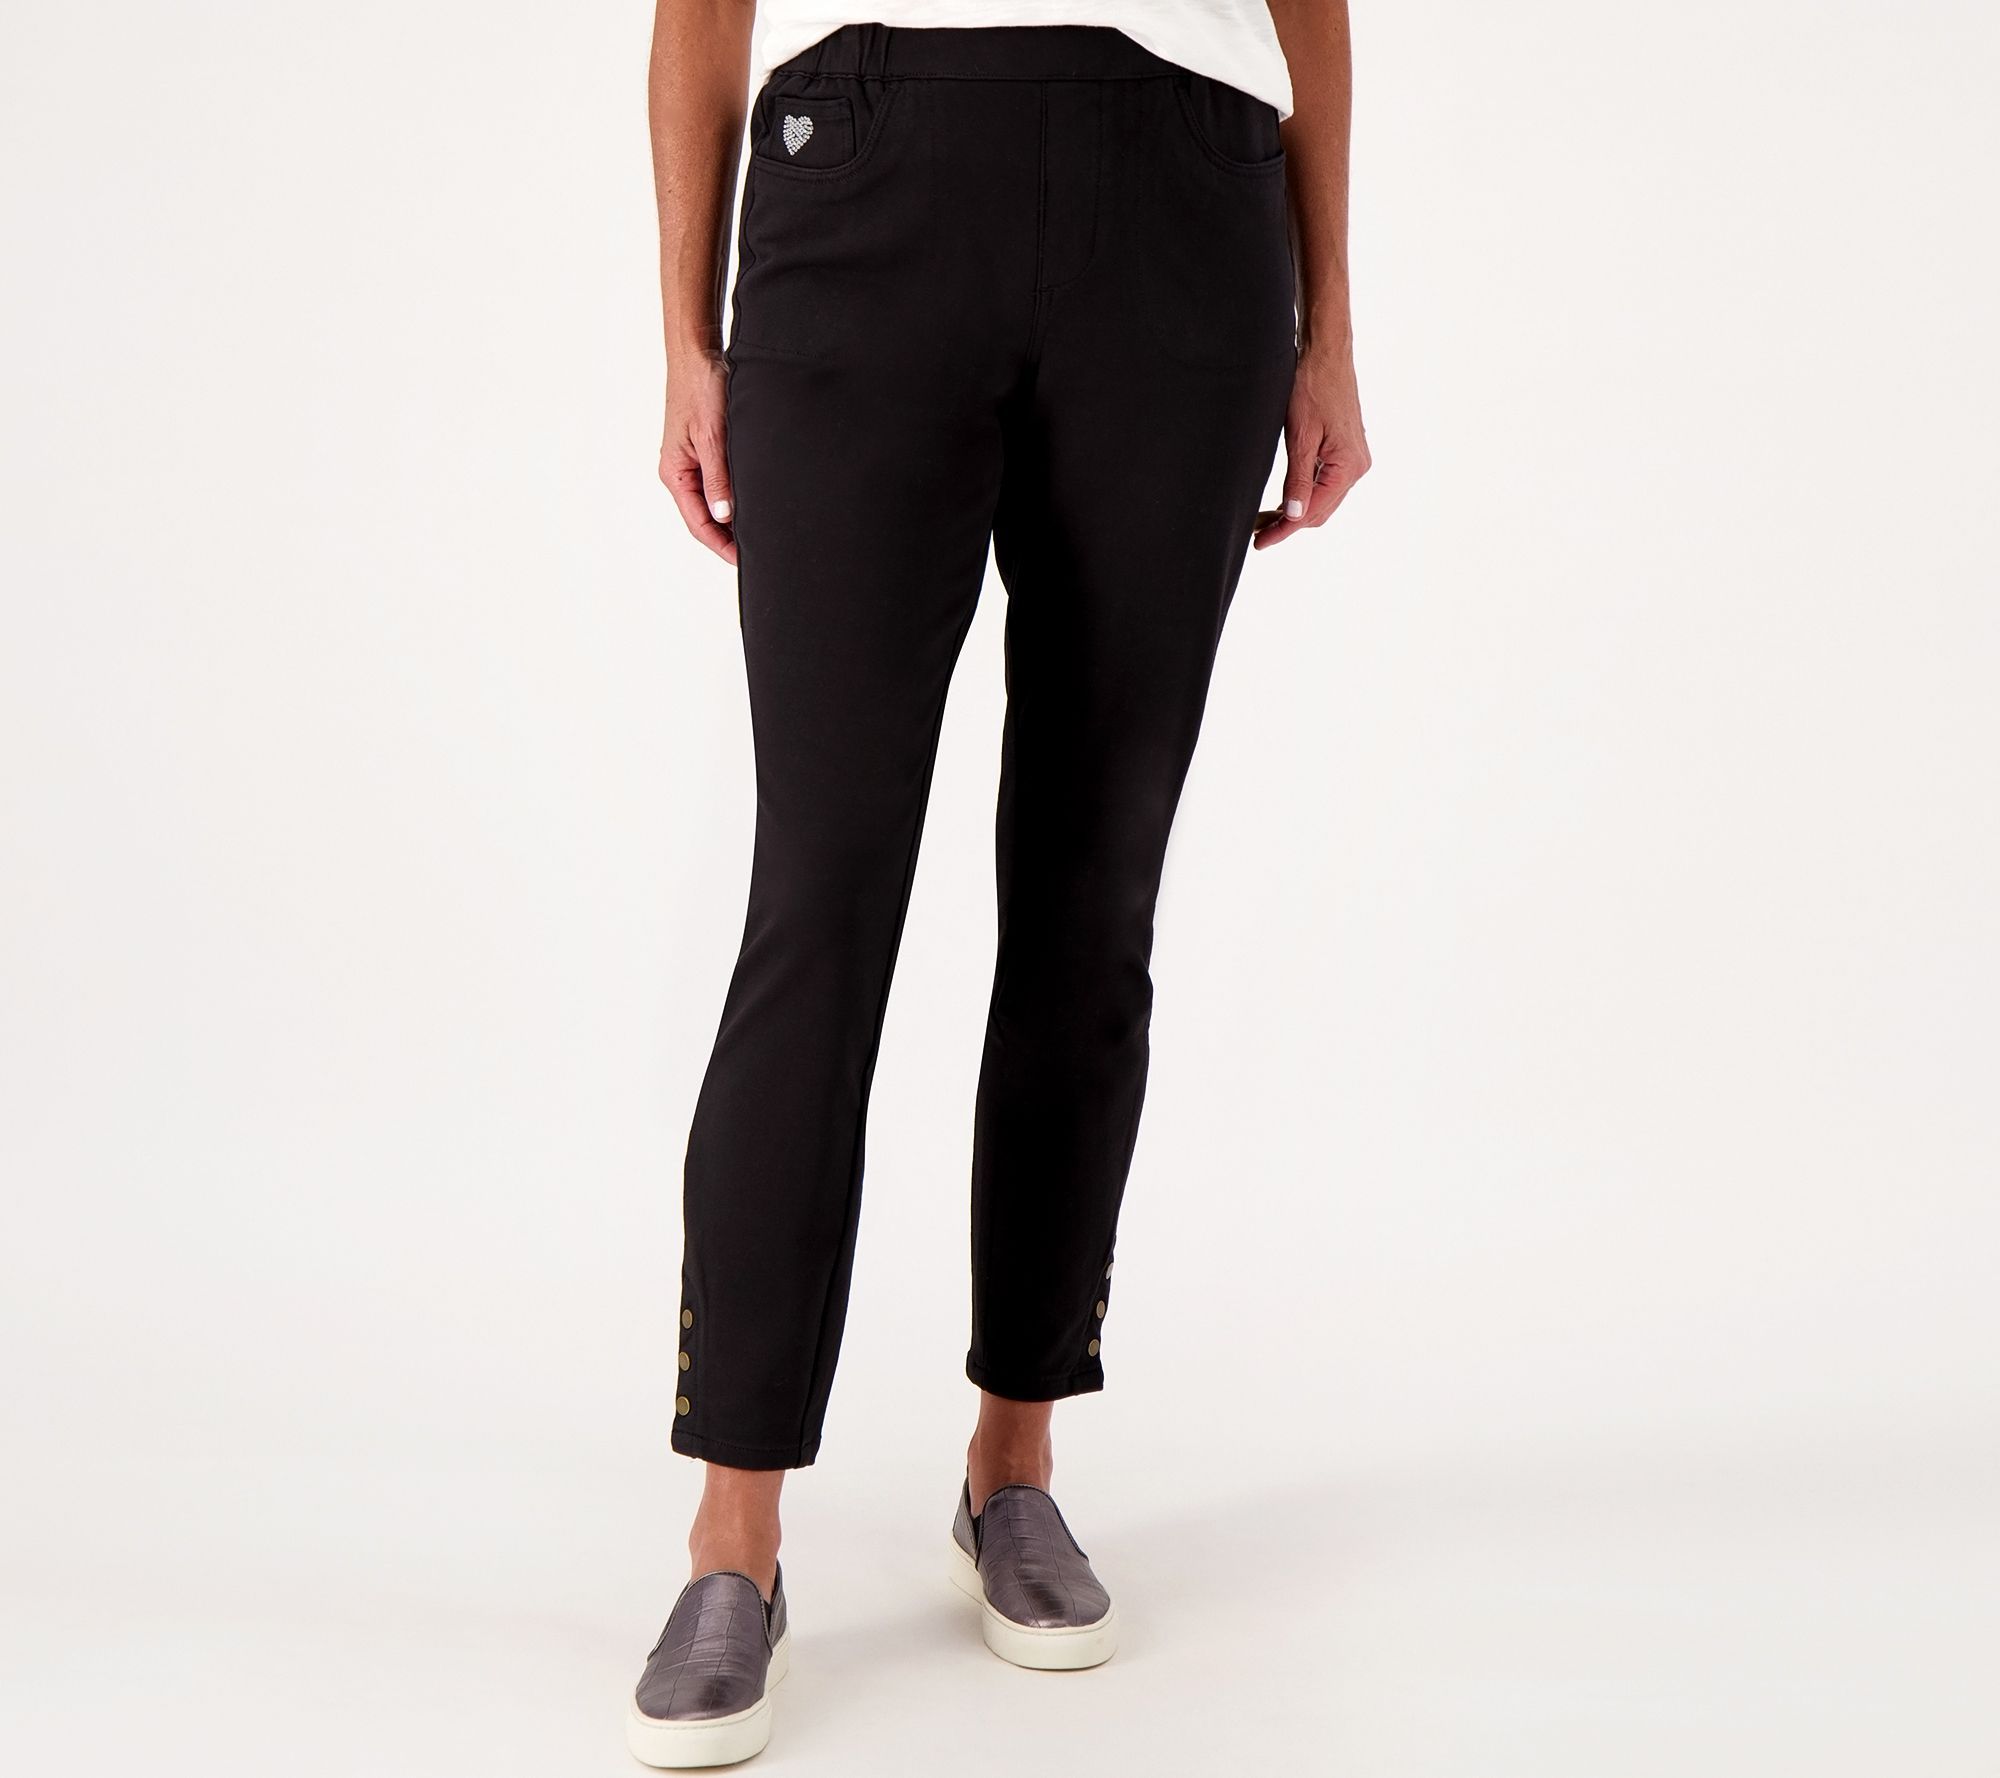 Quacker Factory Women's Petite Pants PM Short DreamJeannes Pull-On Black A563736